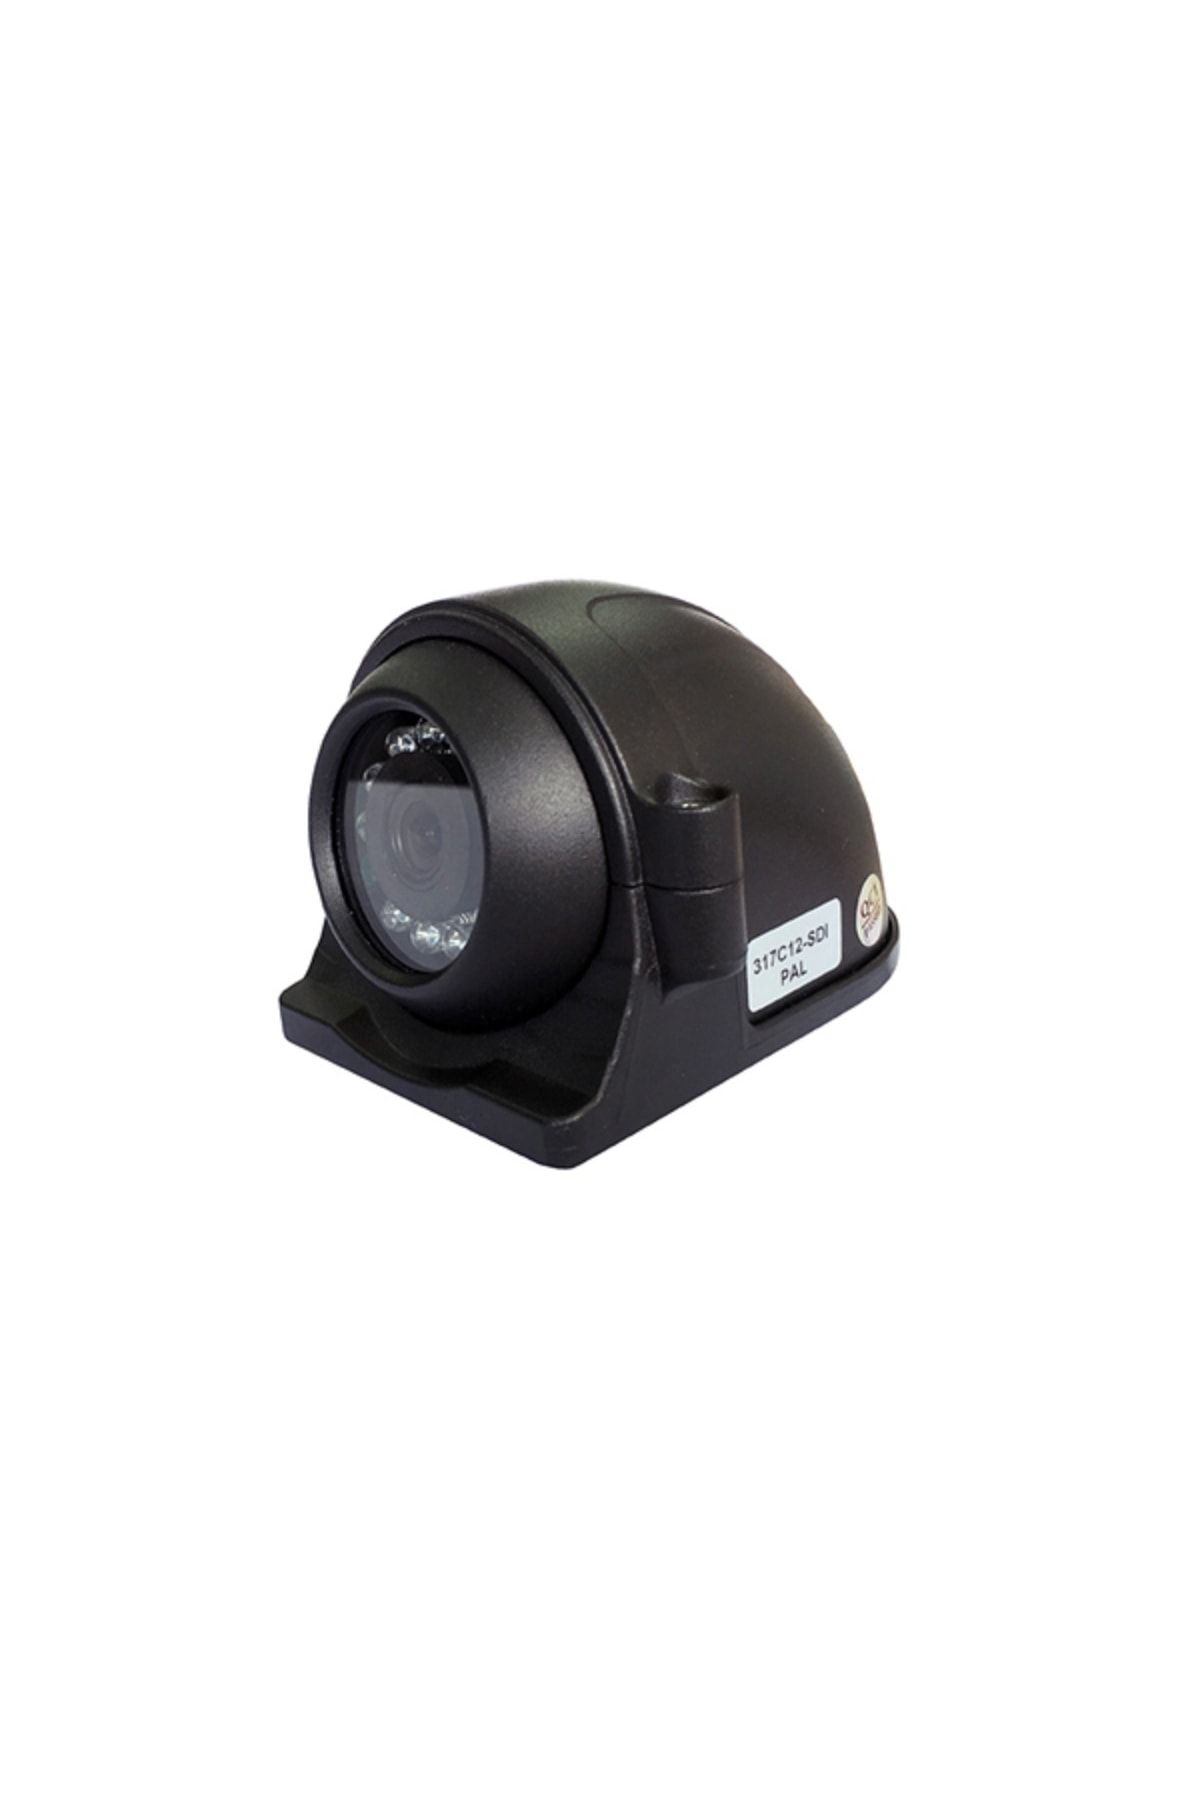 Unique Unıque ® Uq-317c11-ahd Metal Kasa Dome Araç Güvenlik Kamerası